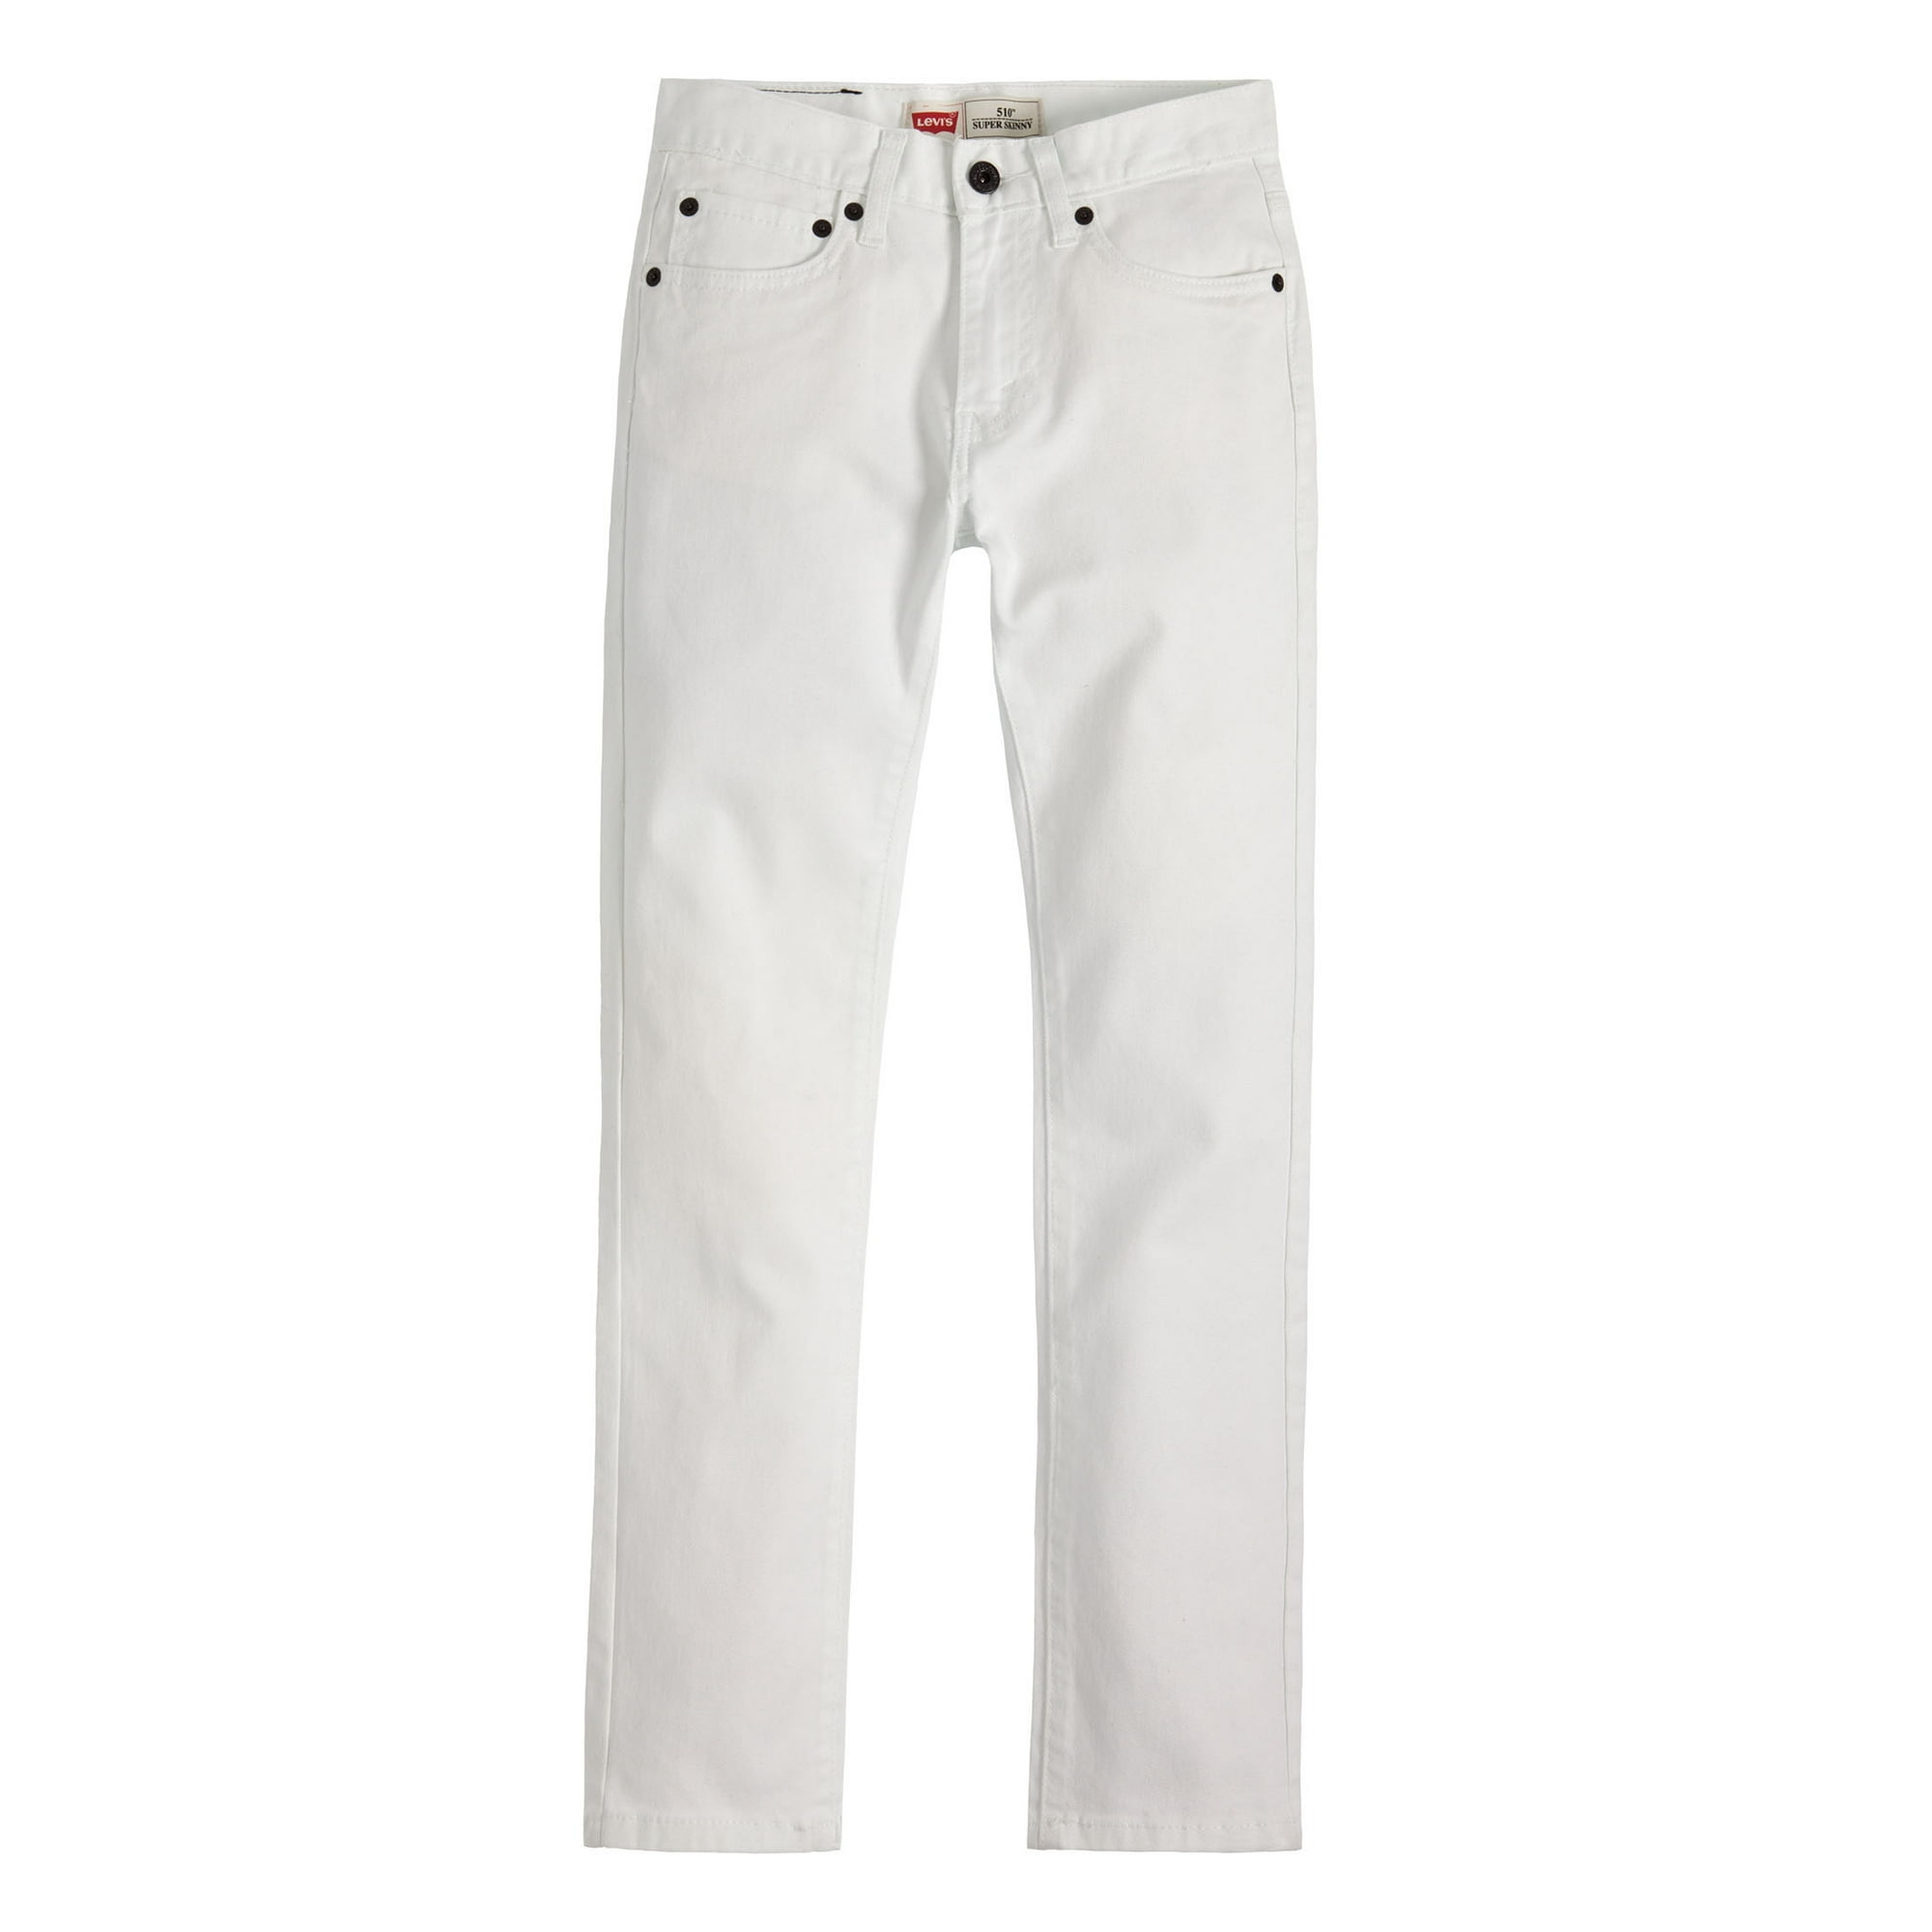 Levi's Boys' Skinny Fit Performance Jeans, Sizes 4-20 - Walmart.com